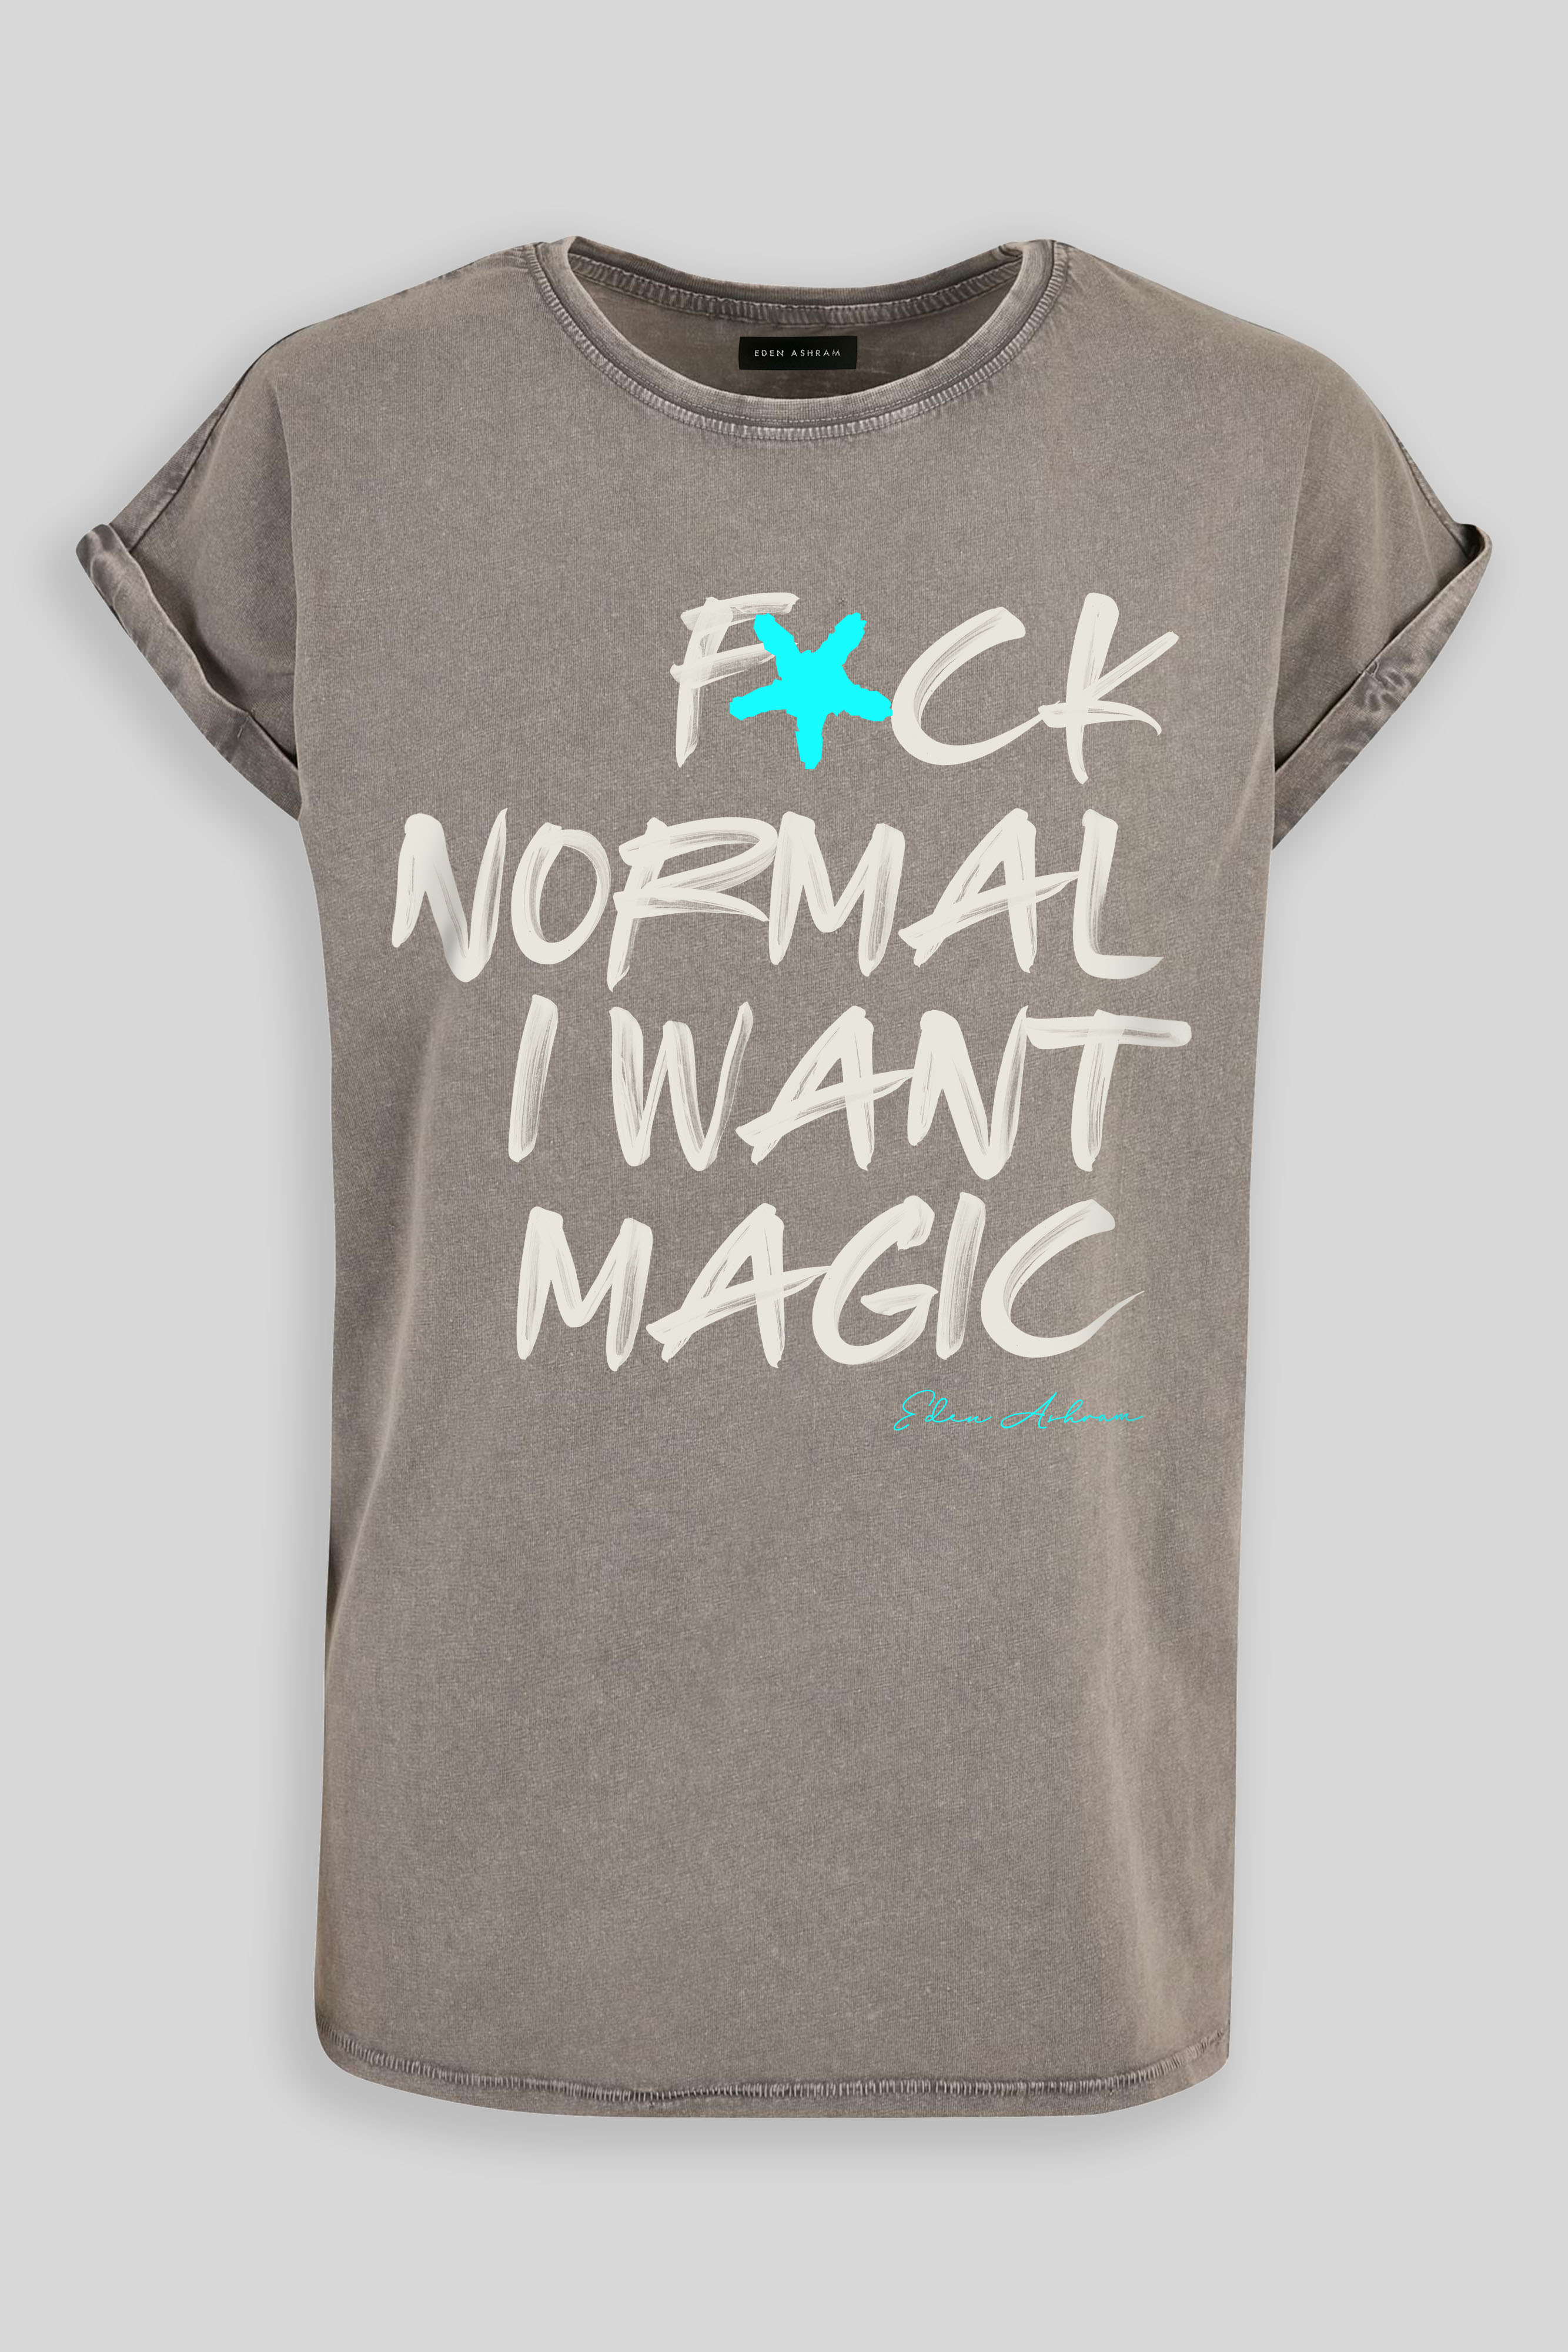 EDEN ASHRAM F*ck Normal I Want Magic Premium Relaxed Boyfriend T-Shirt Acid Wash Grey